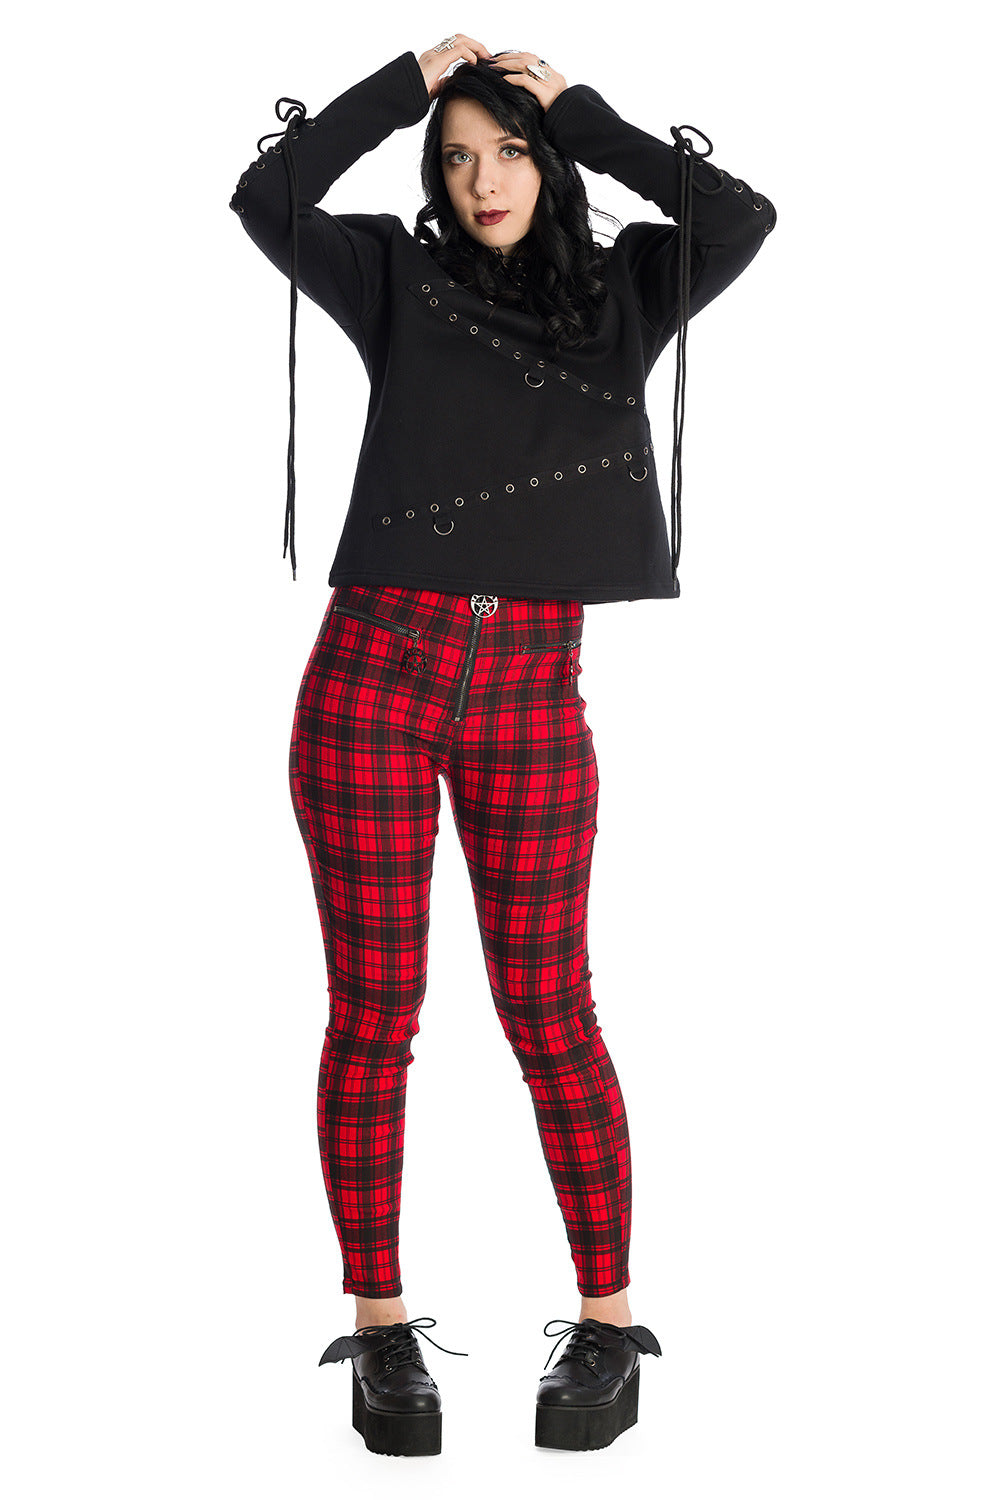 Grunge model in red tartan trousers with black buckle long sleeve top 